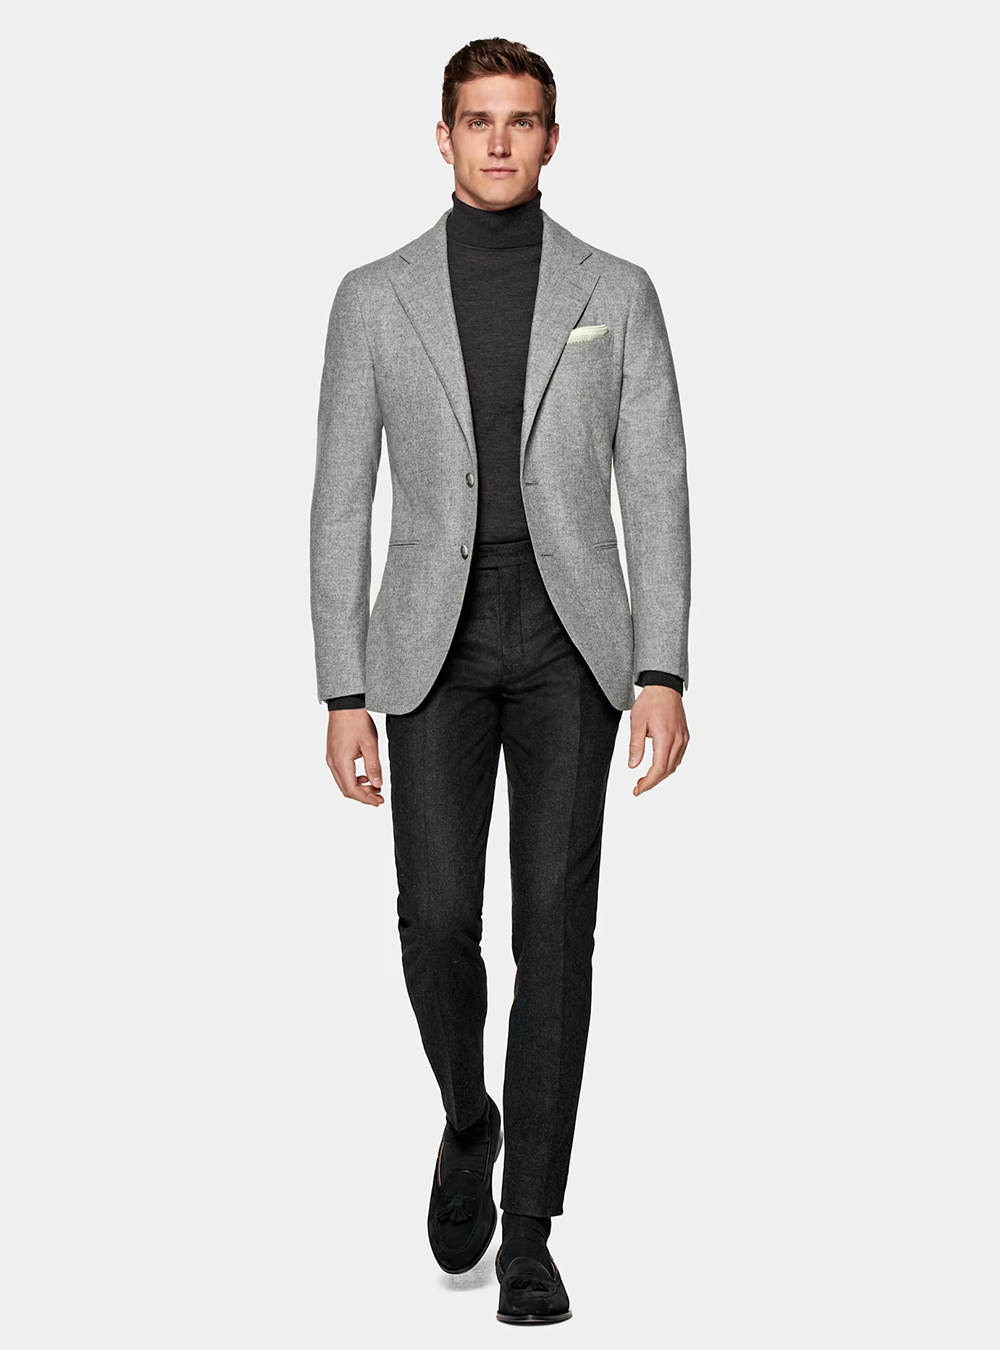 light grey blazer, charcoal turtleneck, and black pants